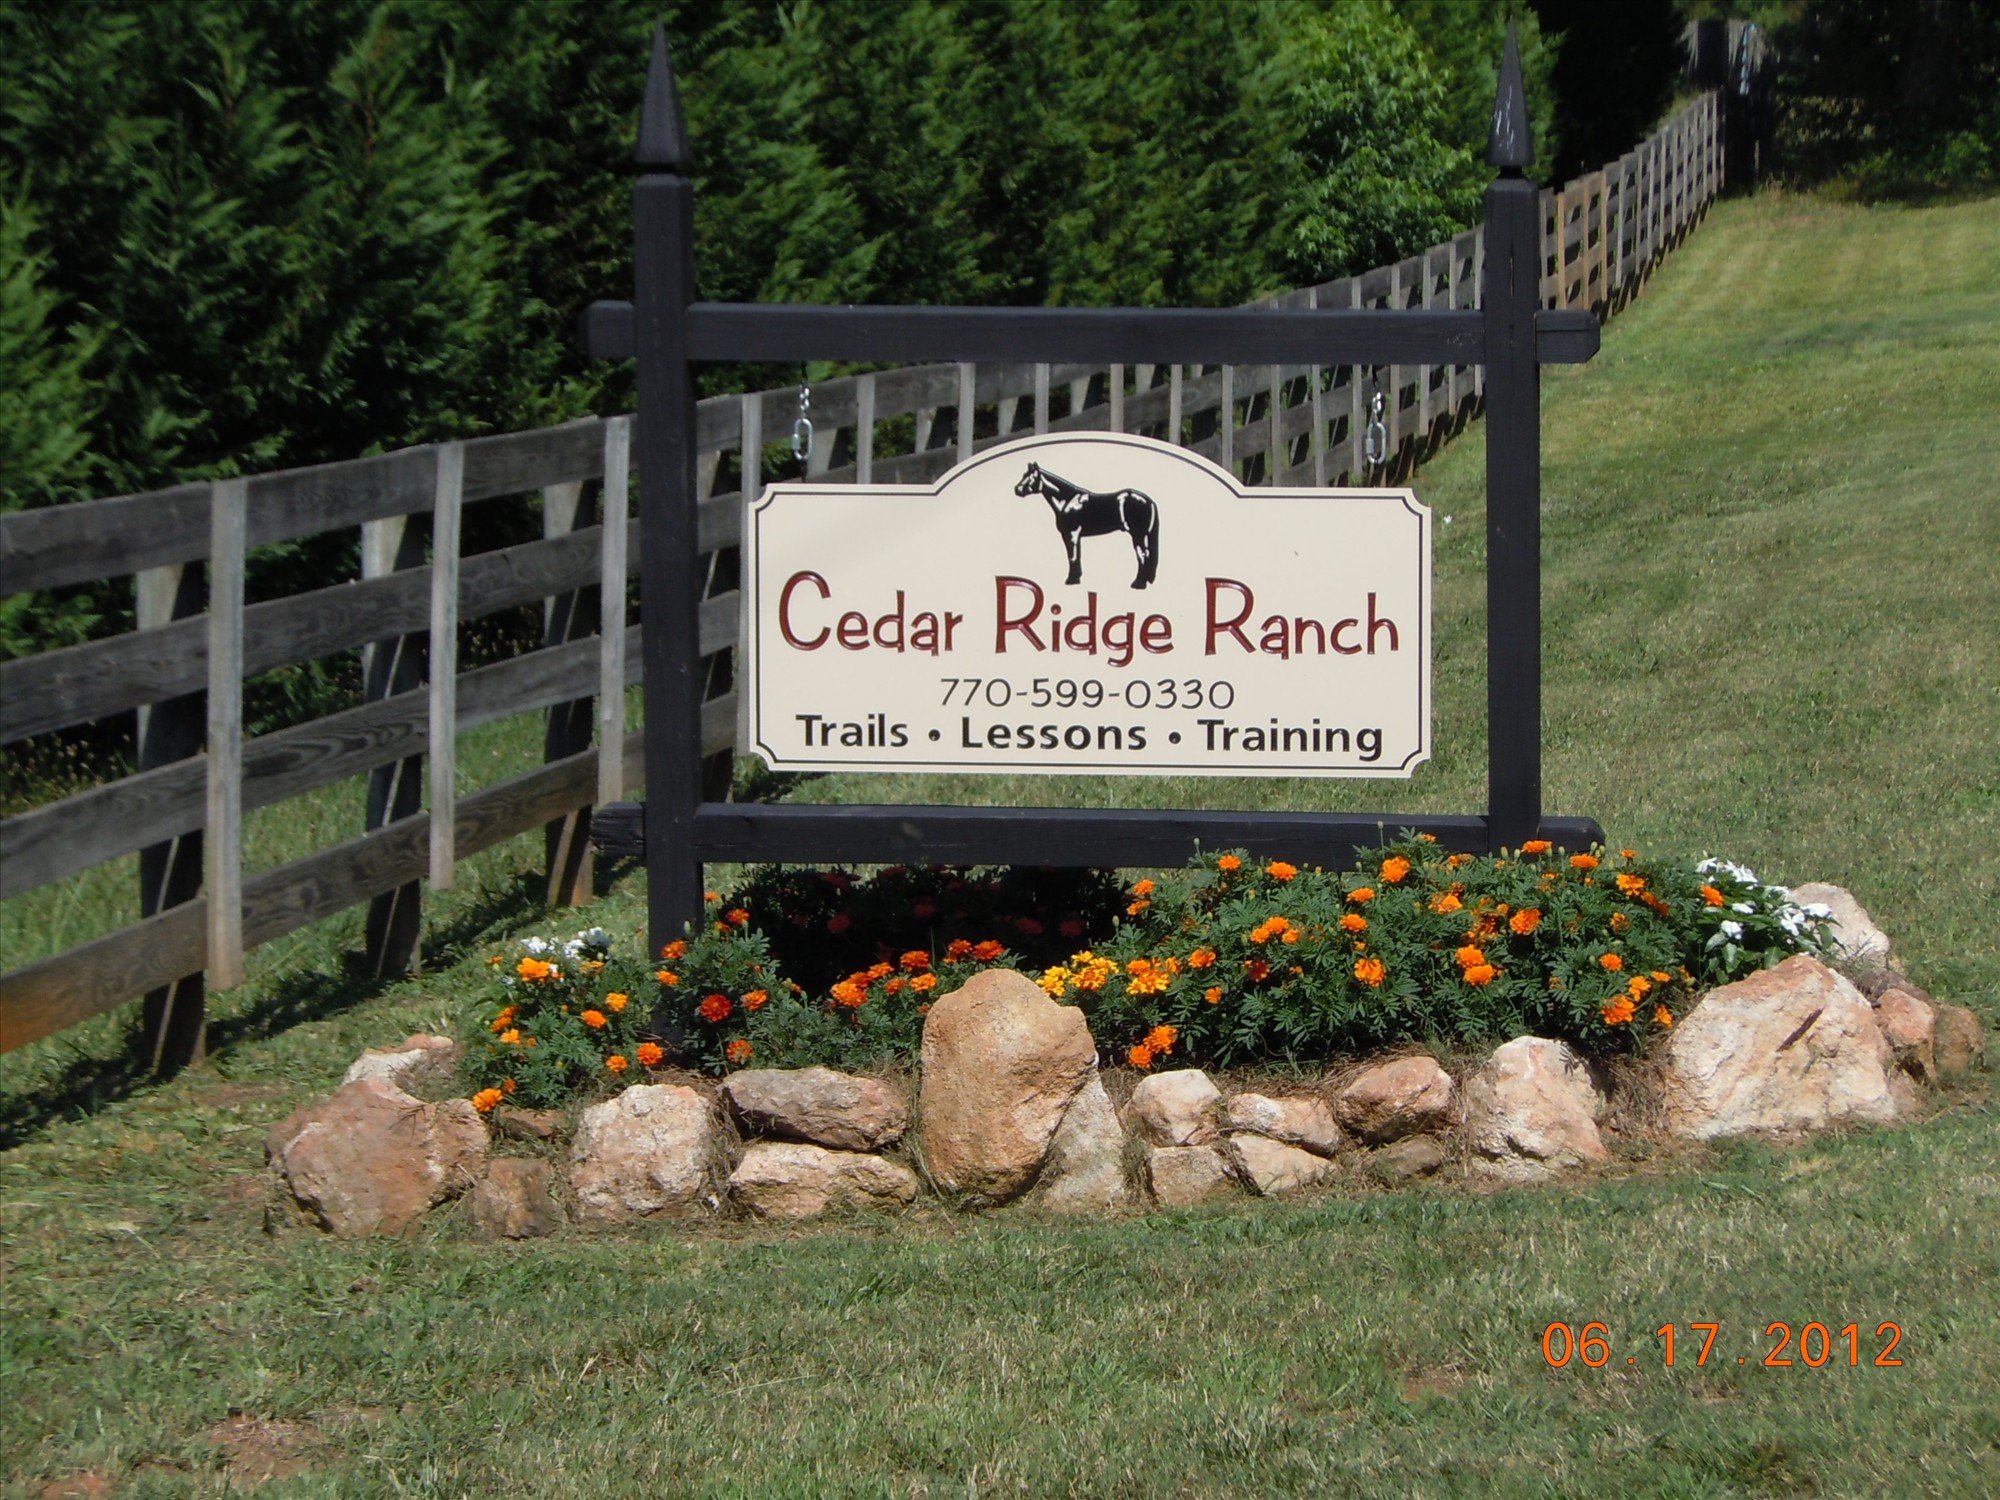 Forsyth GA Cedar Ridge Trail Ride Senoia GA on Dec 9th at 11:00 @ Cedar Ridge Ranch